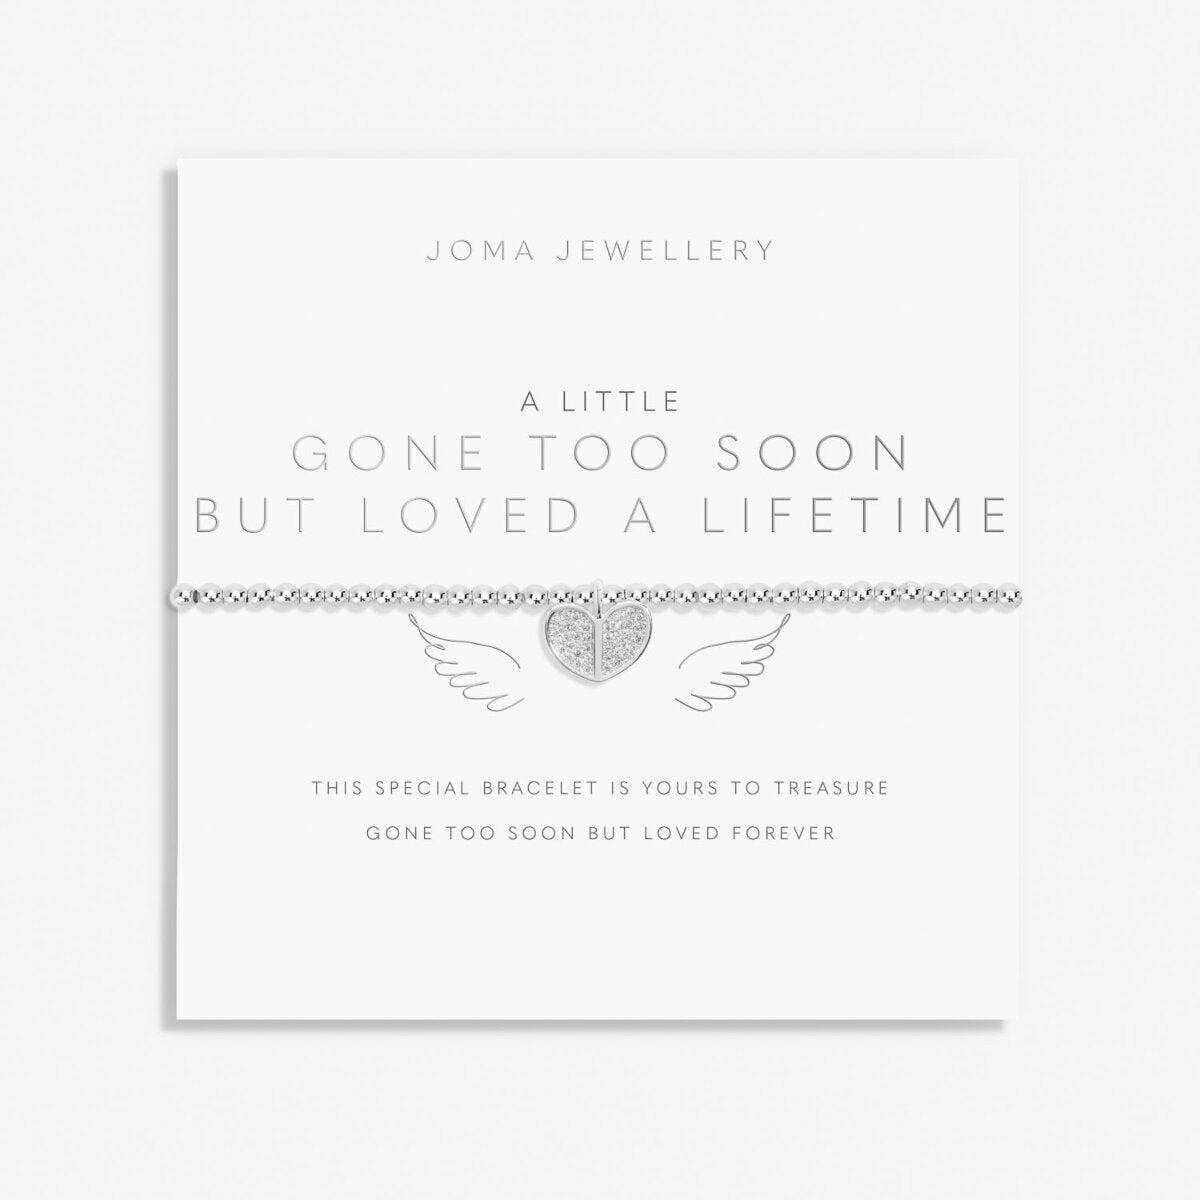 JOMA JEWELLERY | A LITTLE | GONE TOO SOON BUT LOVED A LIFETIME BRACELET